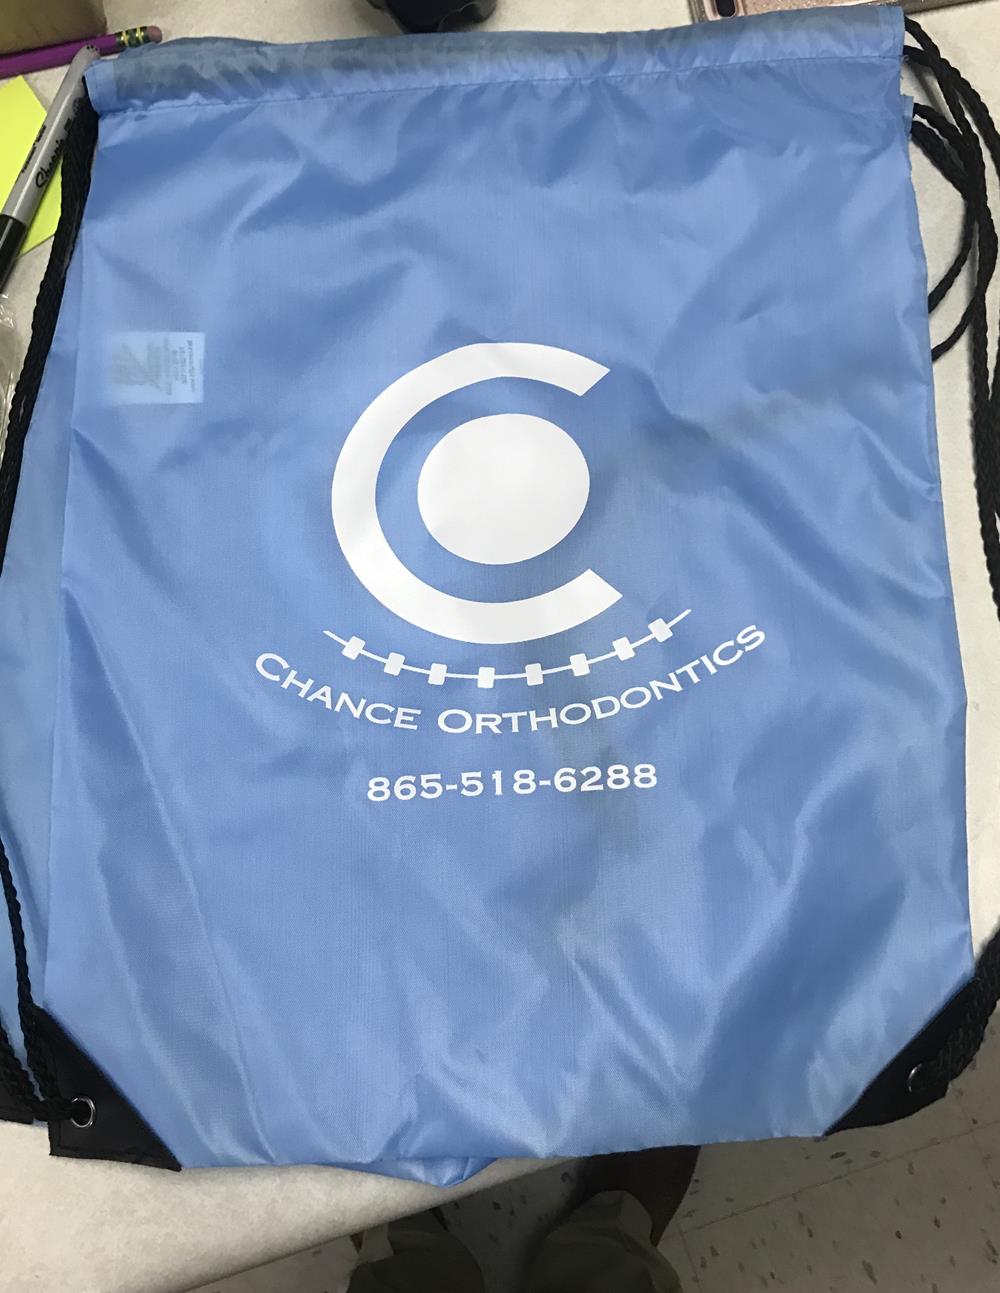 a blue bag with a white logo